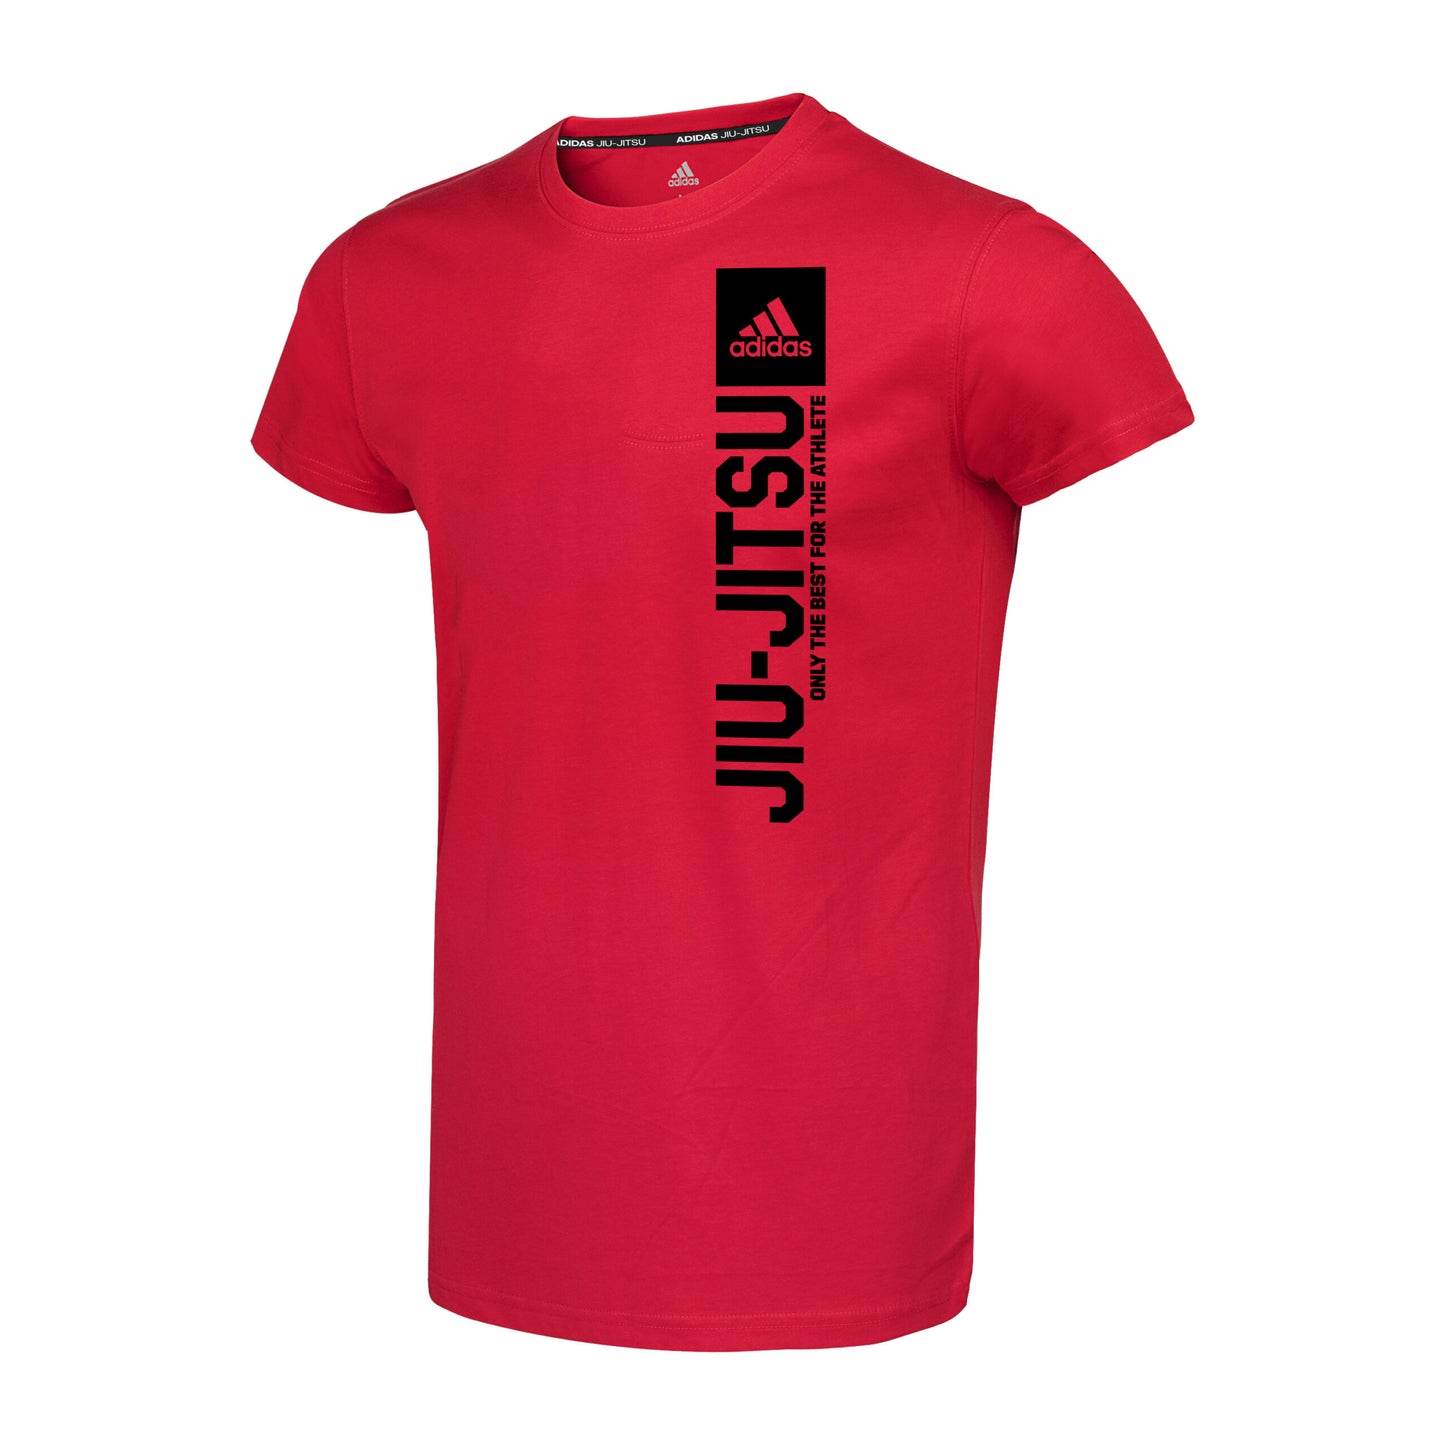 Clts21v Adidas Bjj Jiu Jitsu T Shirt Red 02